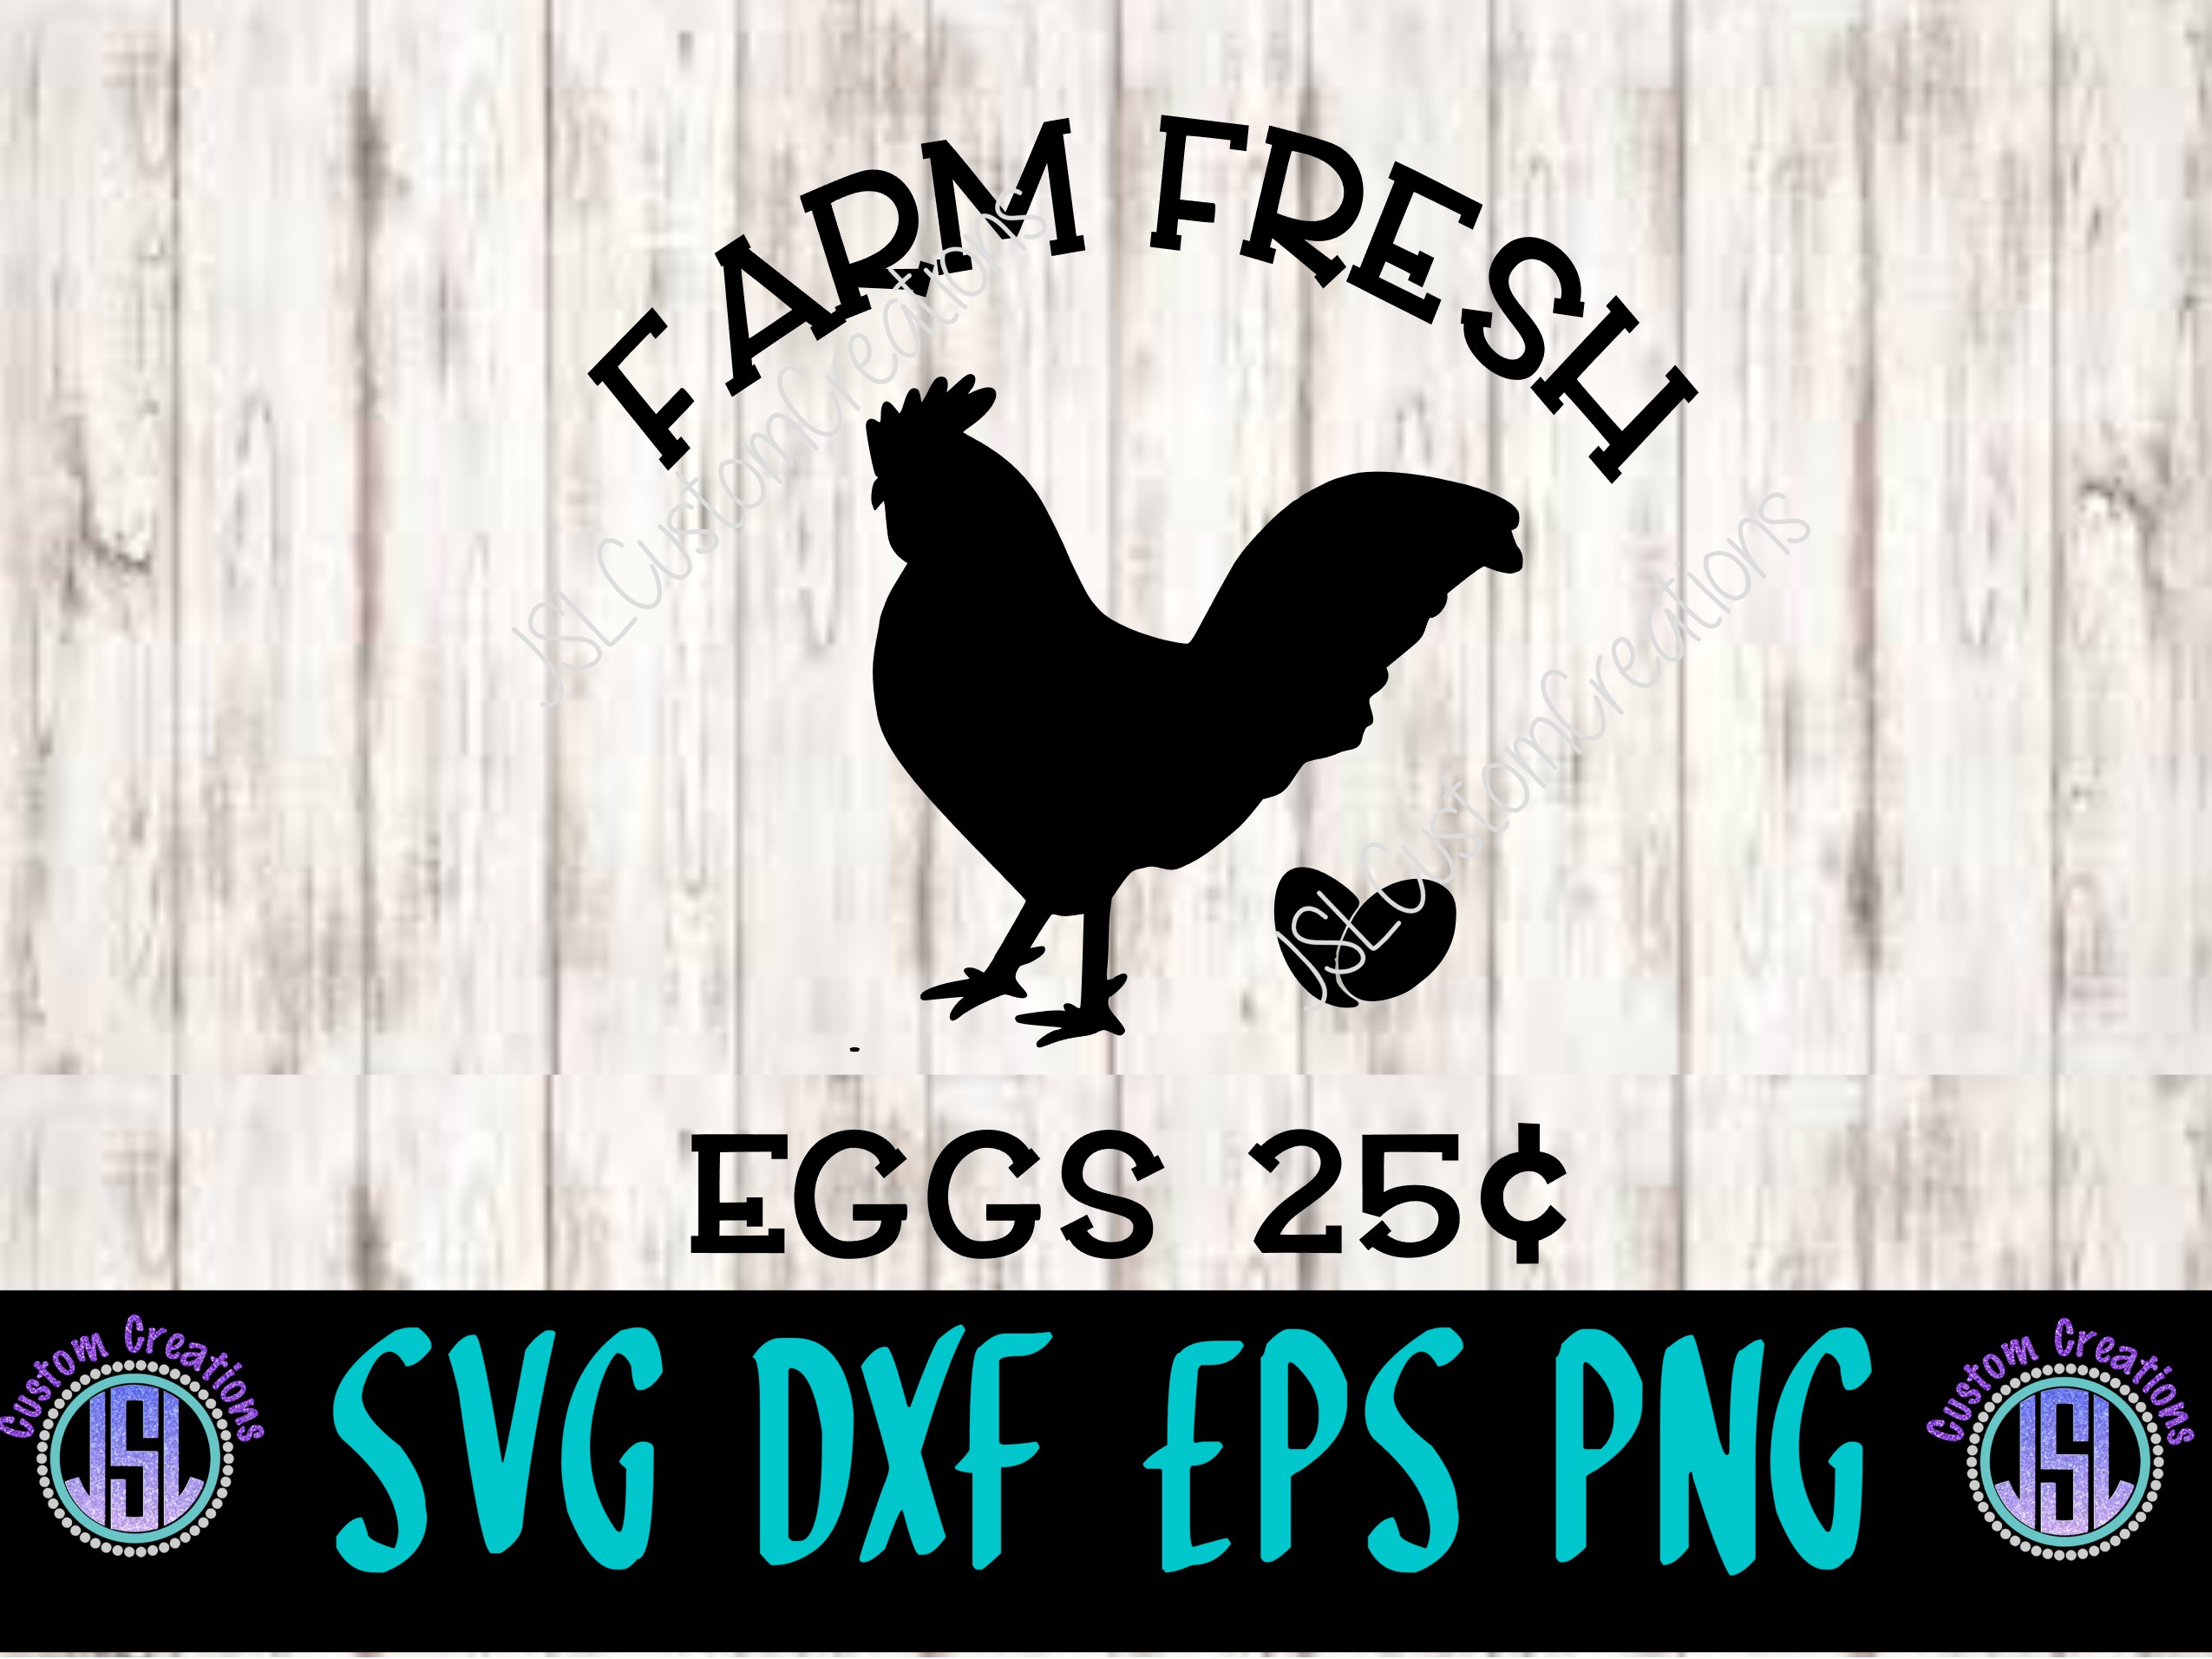 Fresh Farm Eggs Sign SVG DXF EPS PNG Digital Download